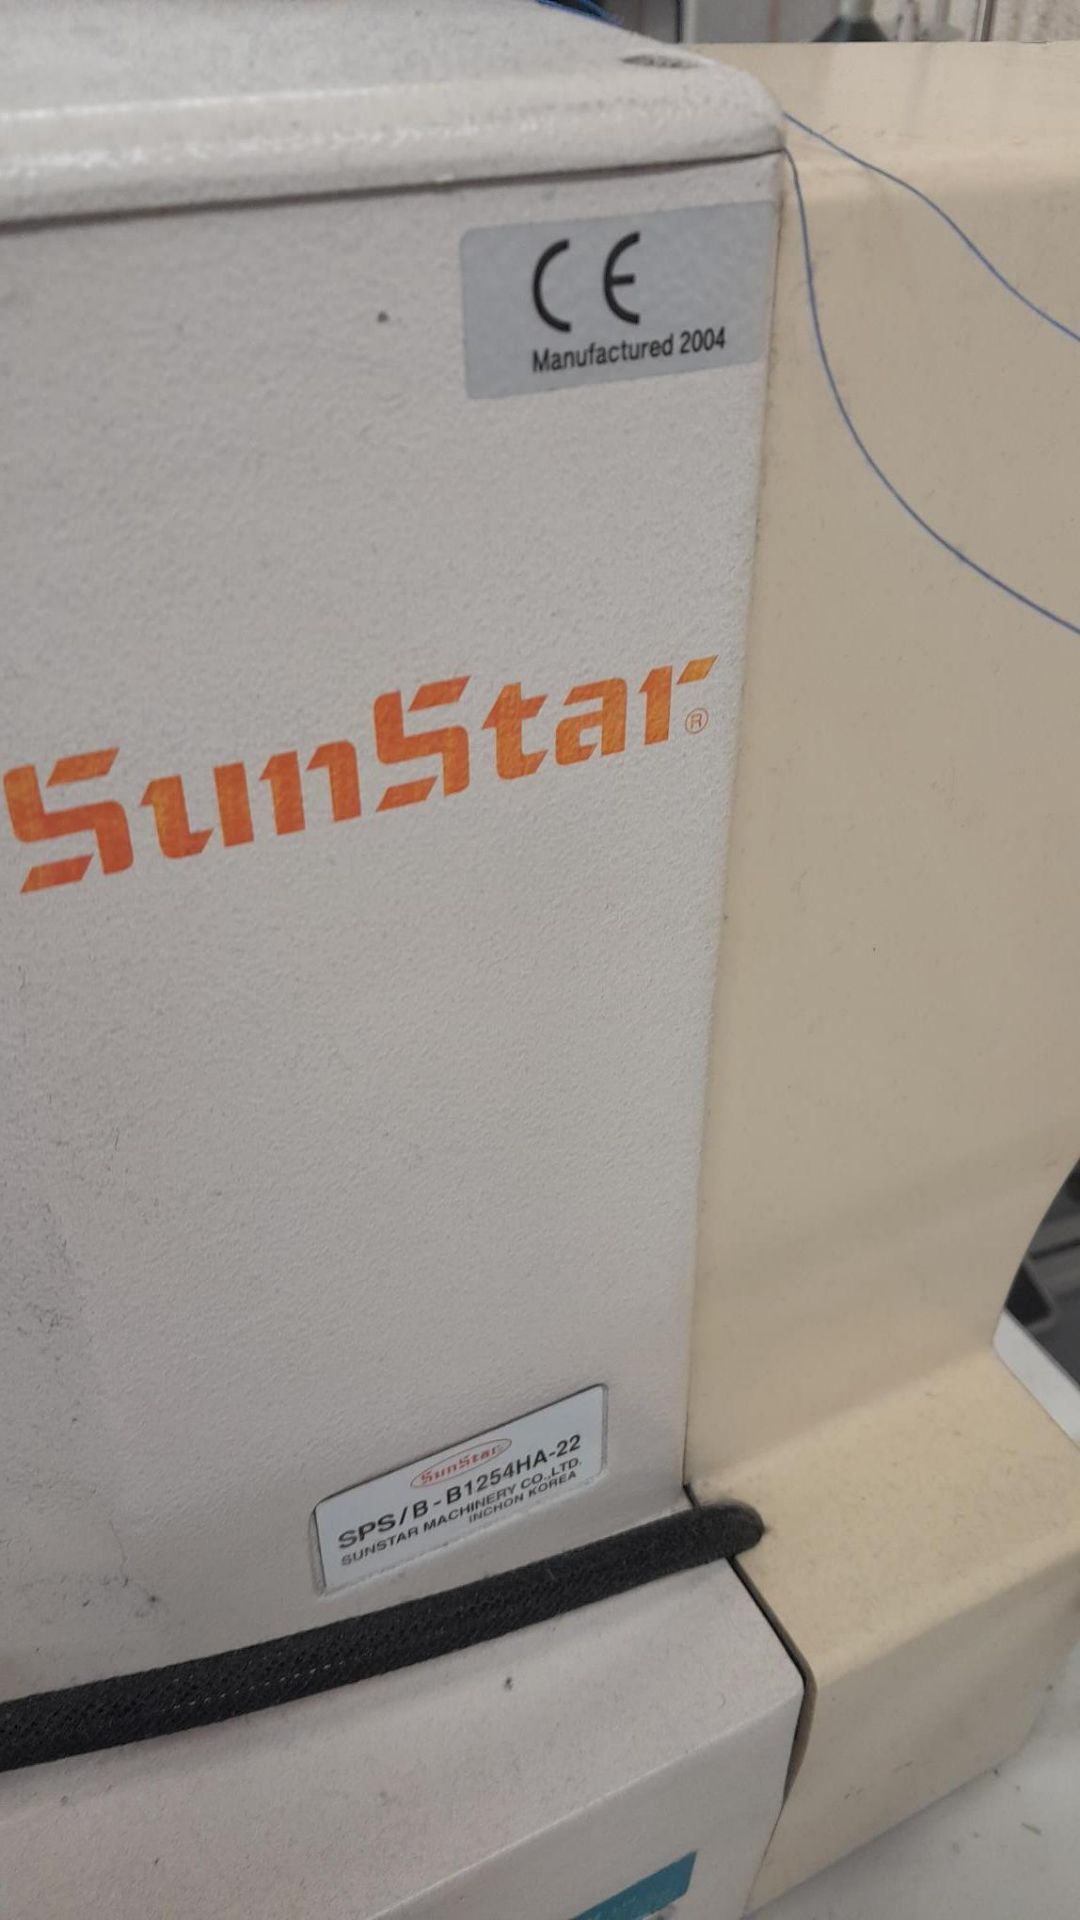 Sunstar SPS/B-B1254 Series Auto Bar Tacker Serial Number PKC004070003-D, 240v - Image 4 of 4